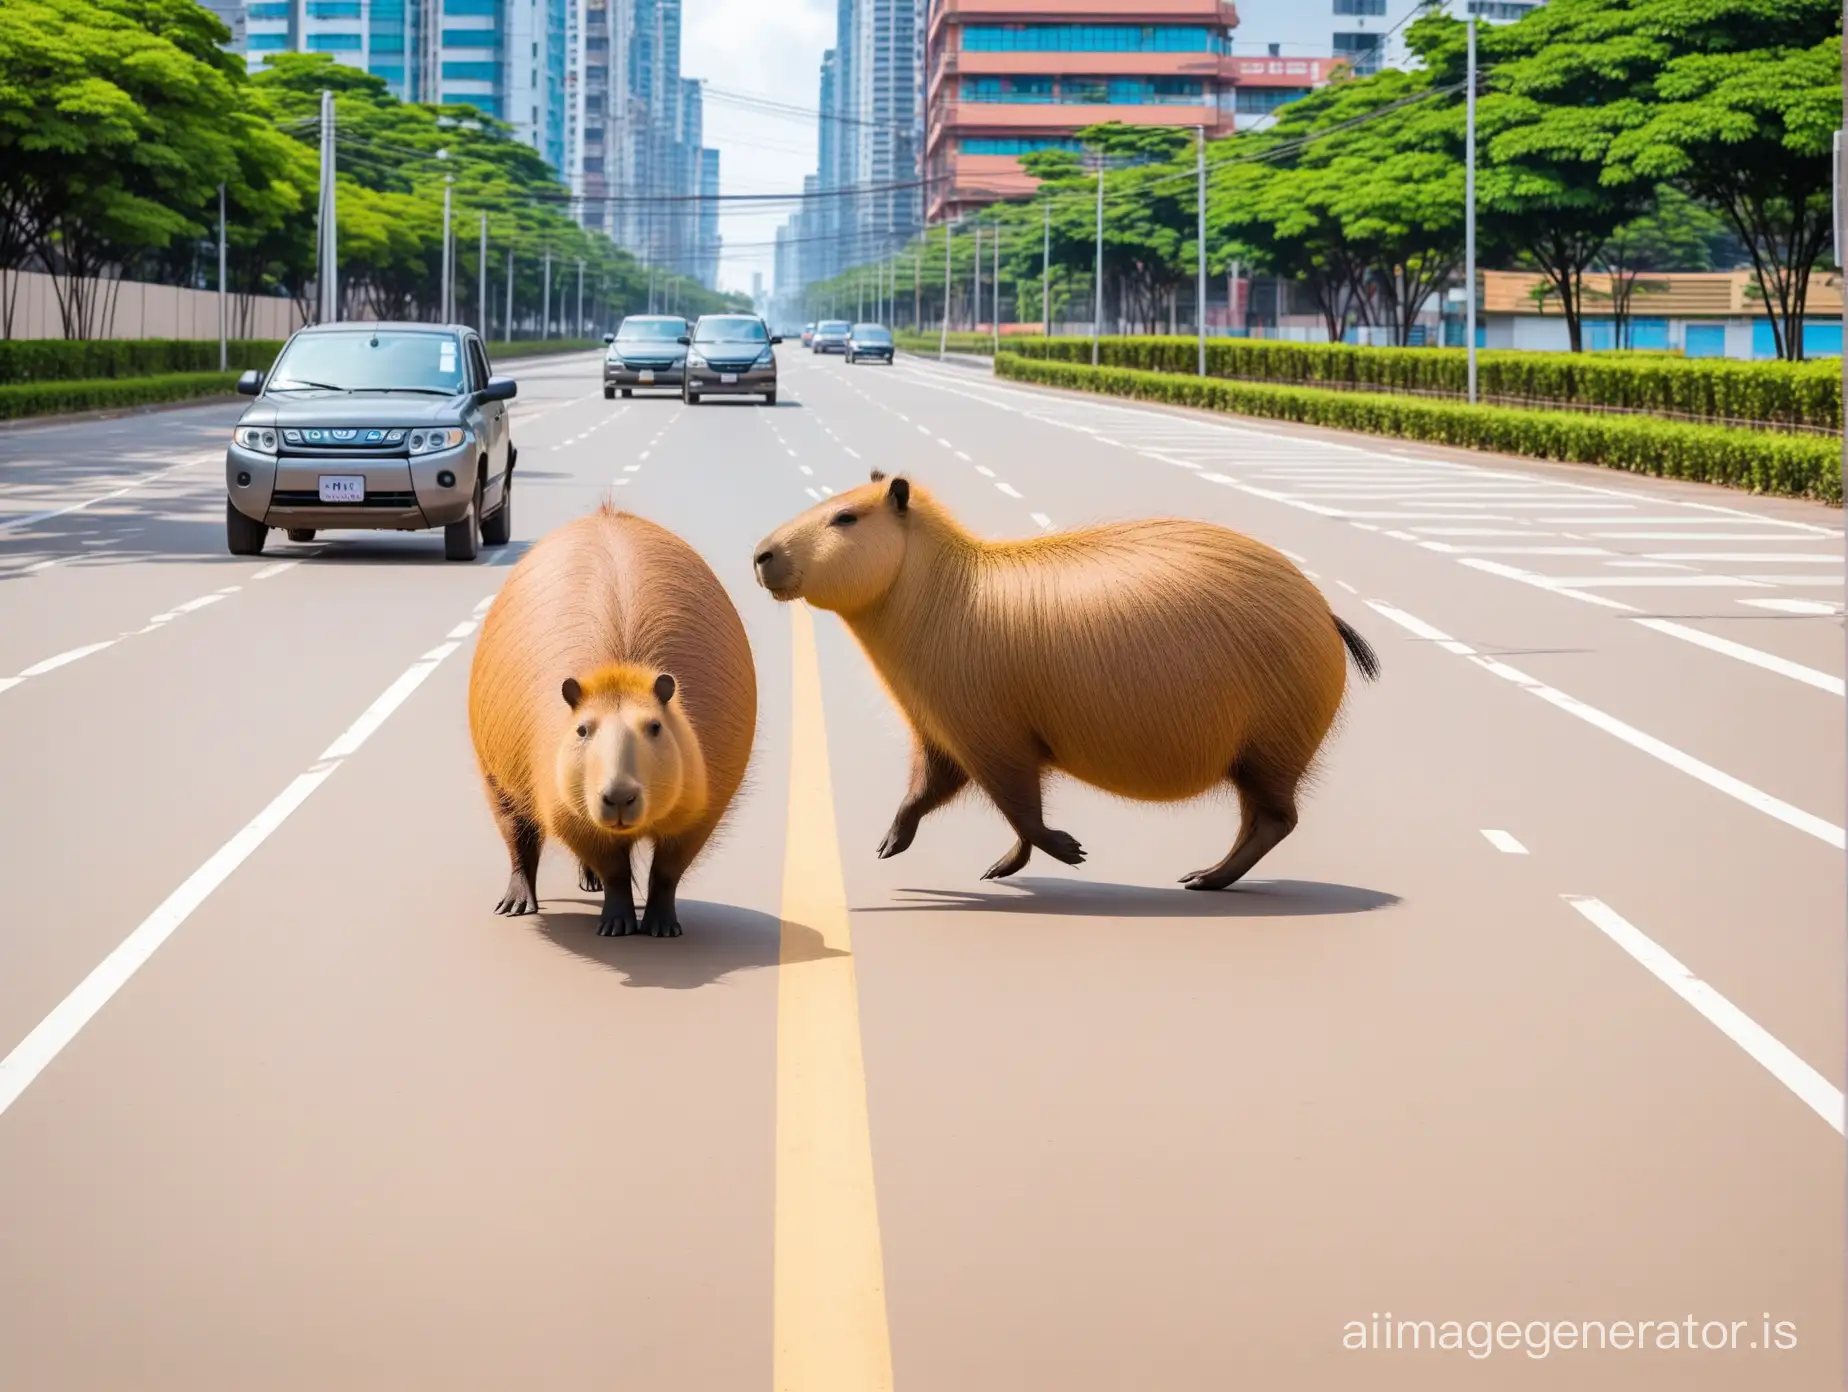 Capybara cross a road in city